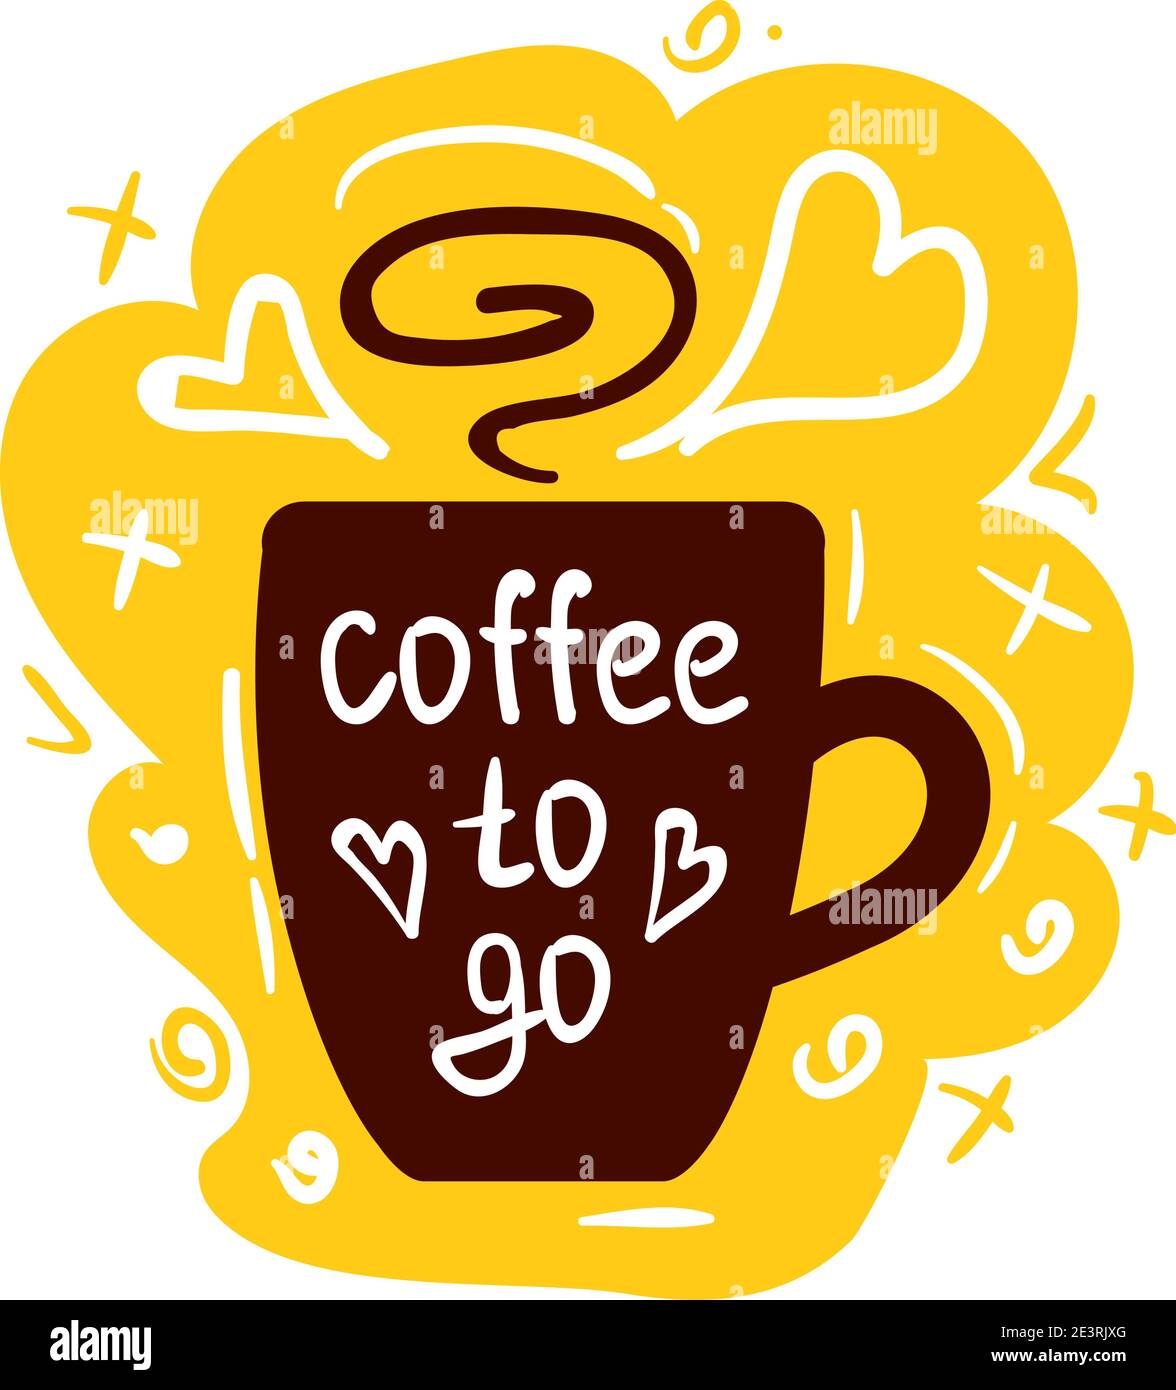 https://c8.alamy.com/comp/2E3RJXG/coffee-cup-logo-coffee-mugs-color-banner-on-white-background-with-text-coffee-to-go-2E3RJXG.jpg